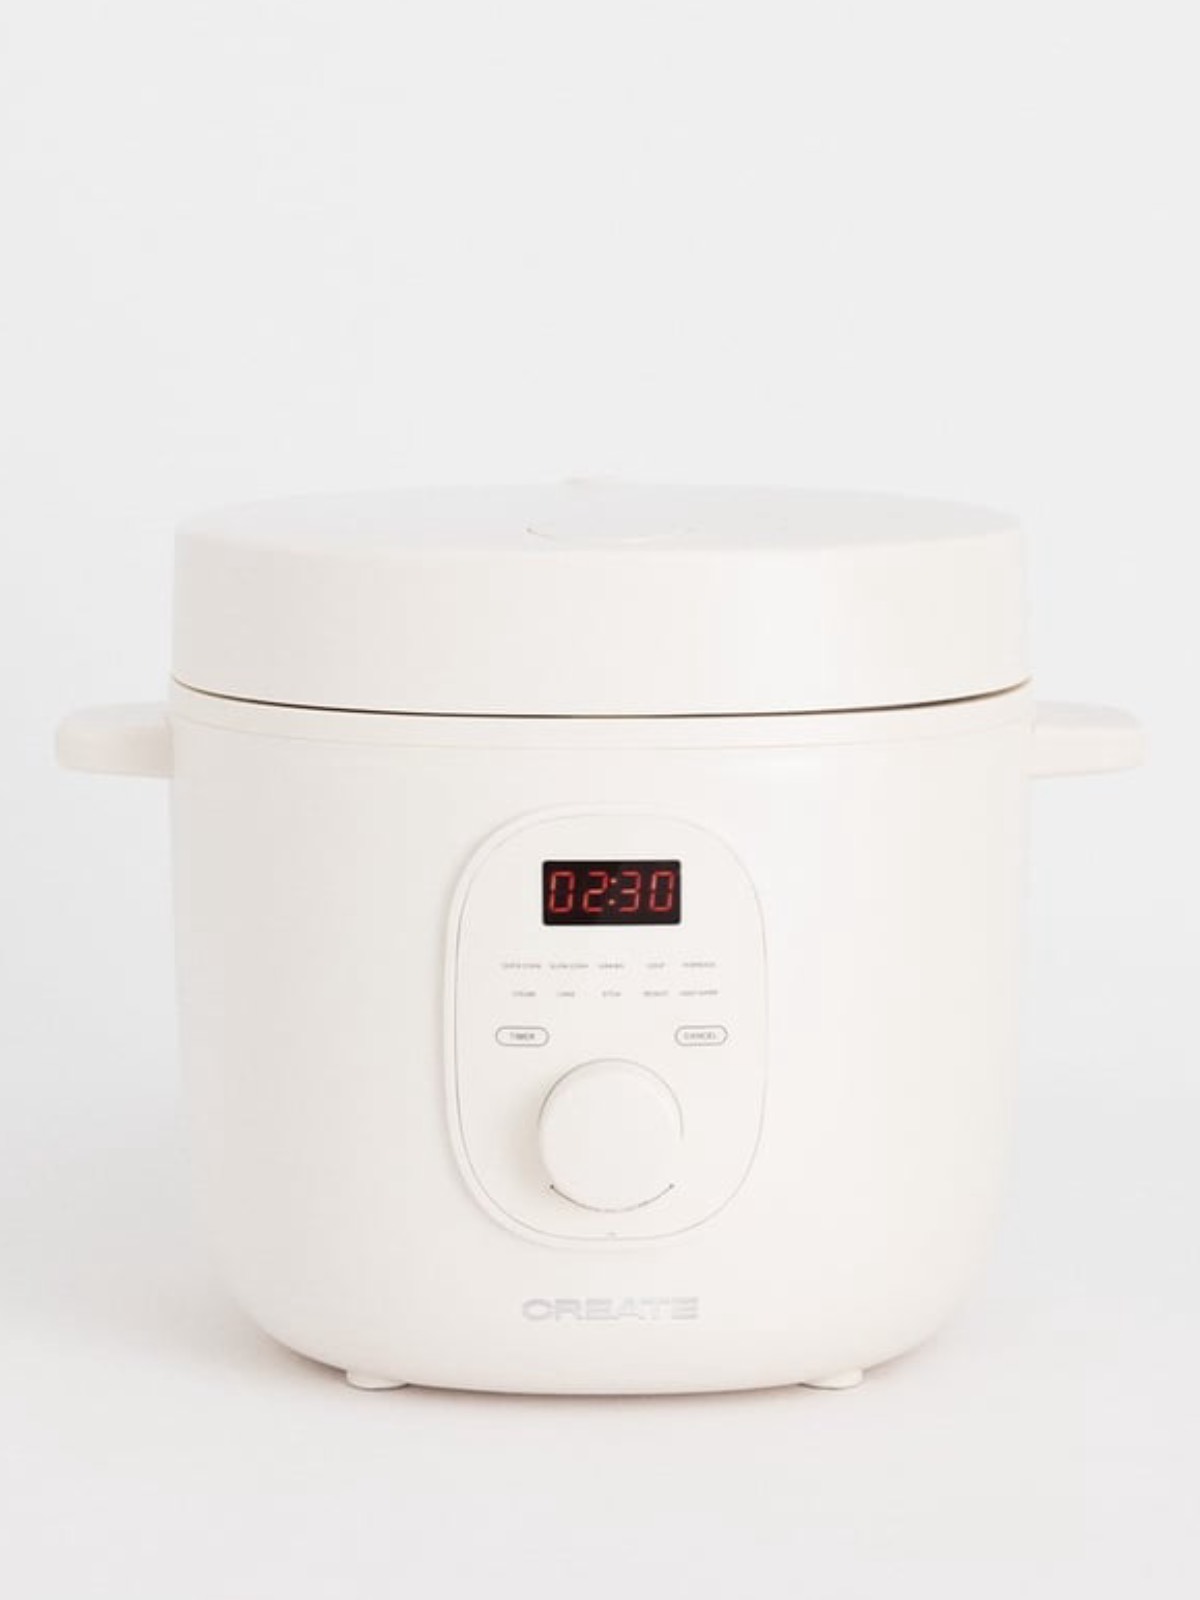 Rice Cooker - Arrocera eléctrica 2 litros - Jordi Cruz Mas